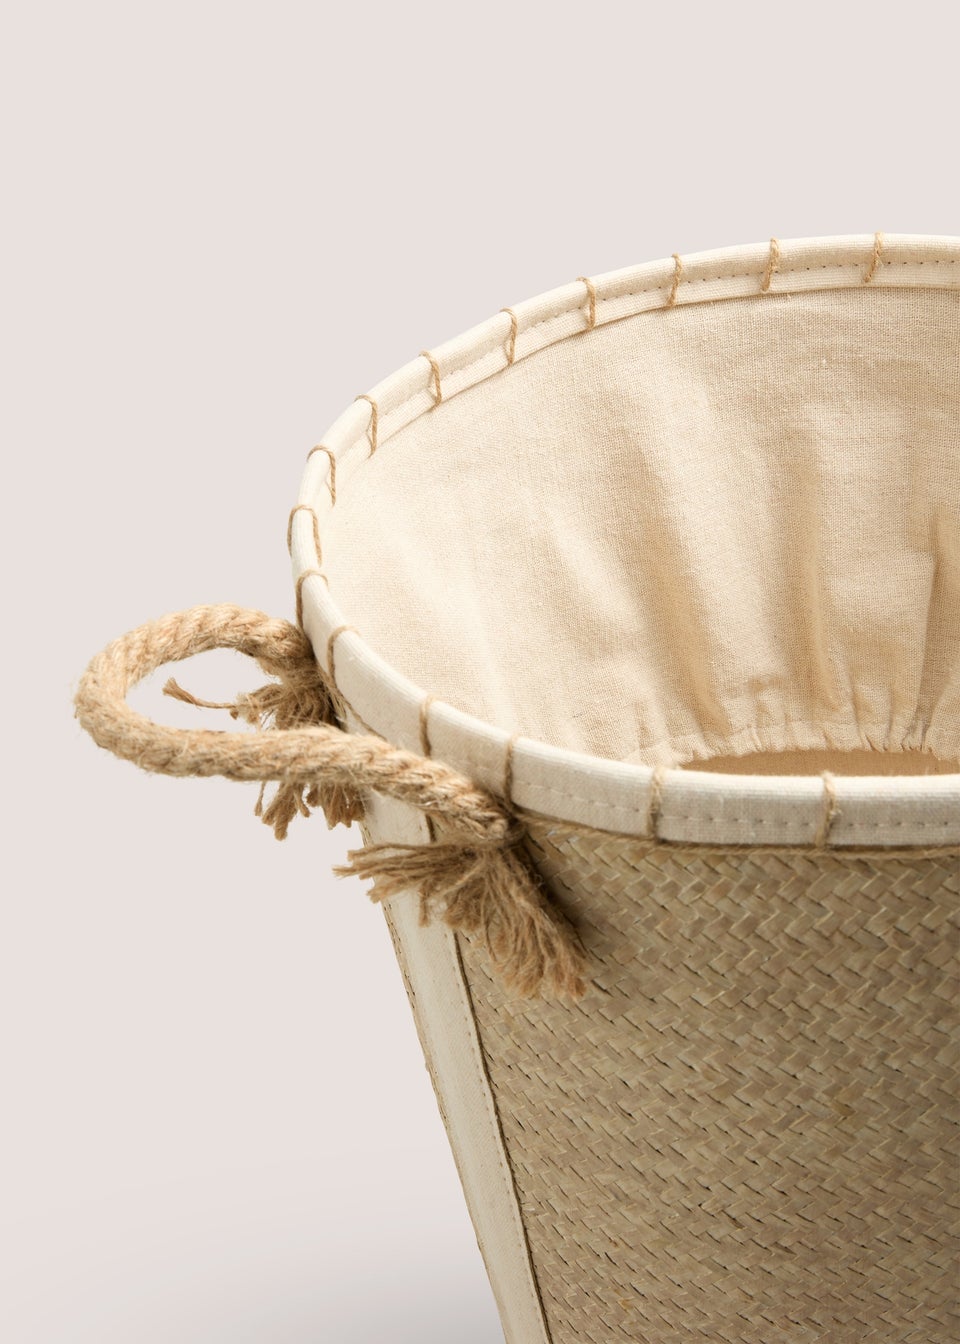 Natural Artisan Laundry Basket (50cm x 34cm x 35cm)